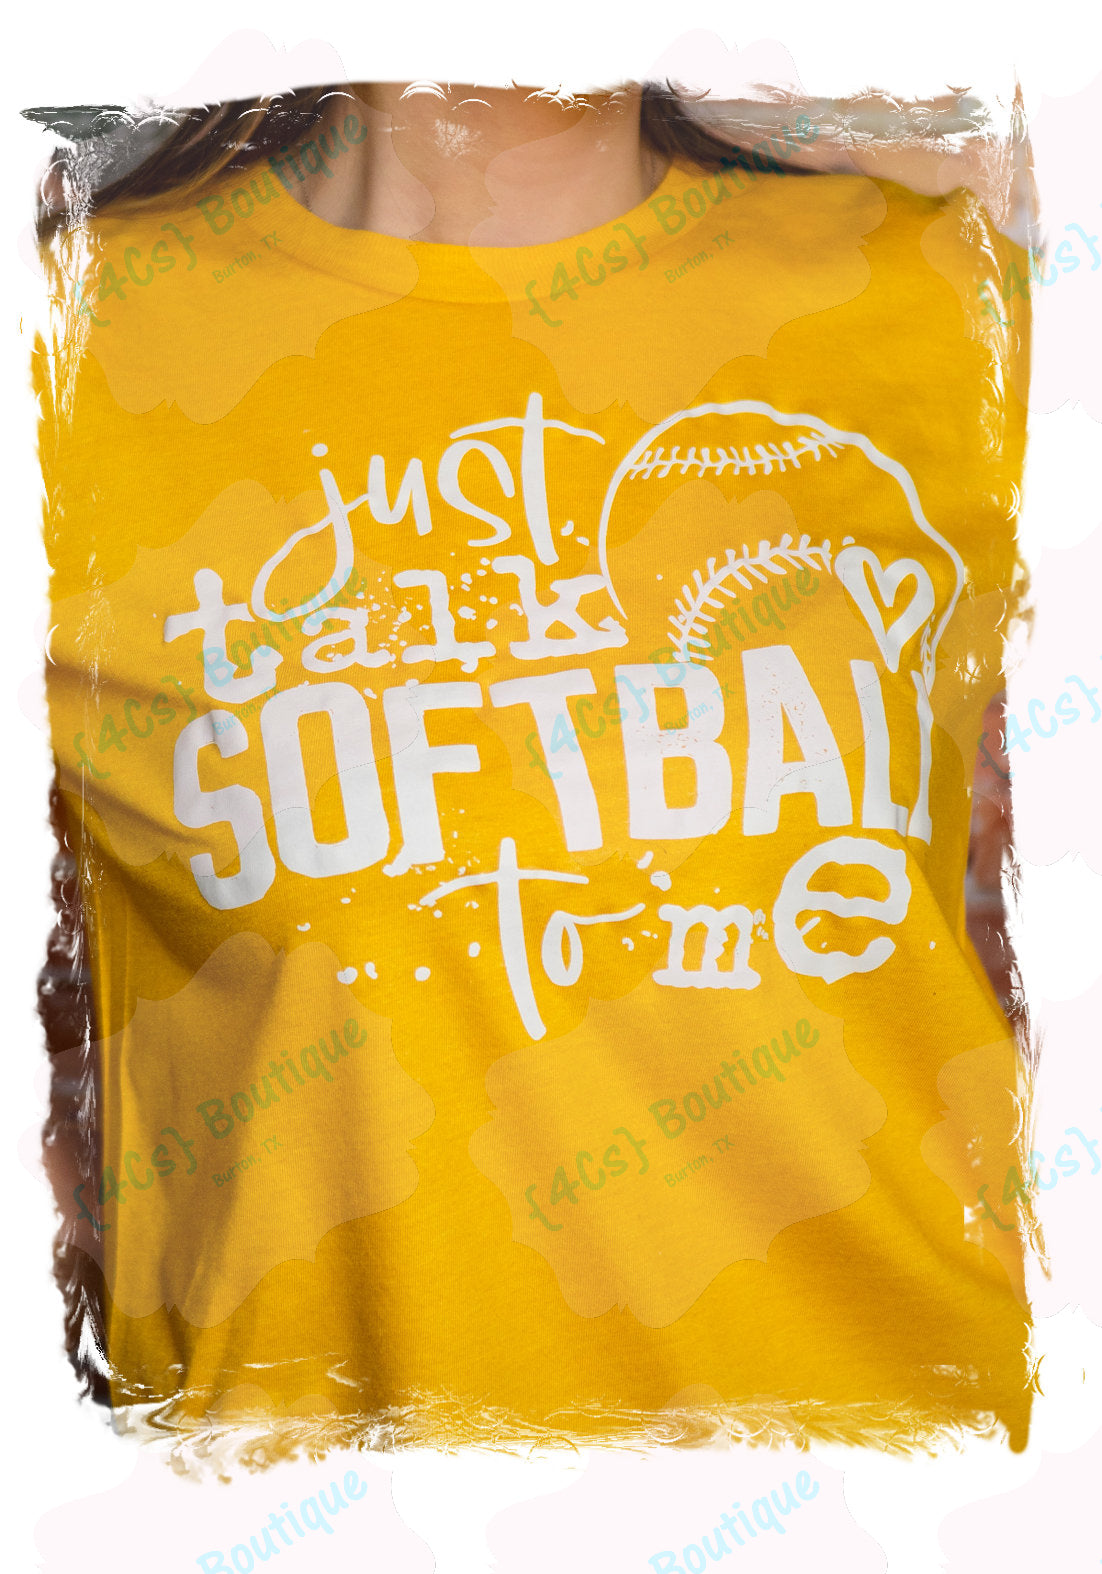 Just Talk Softball To Me Shirt